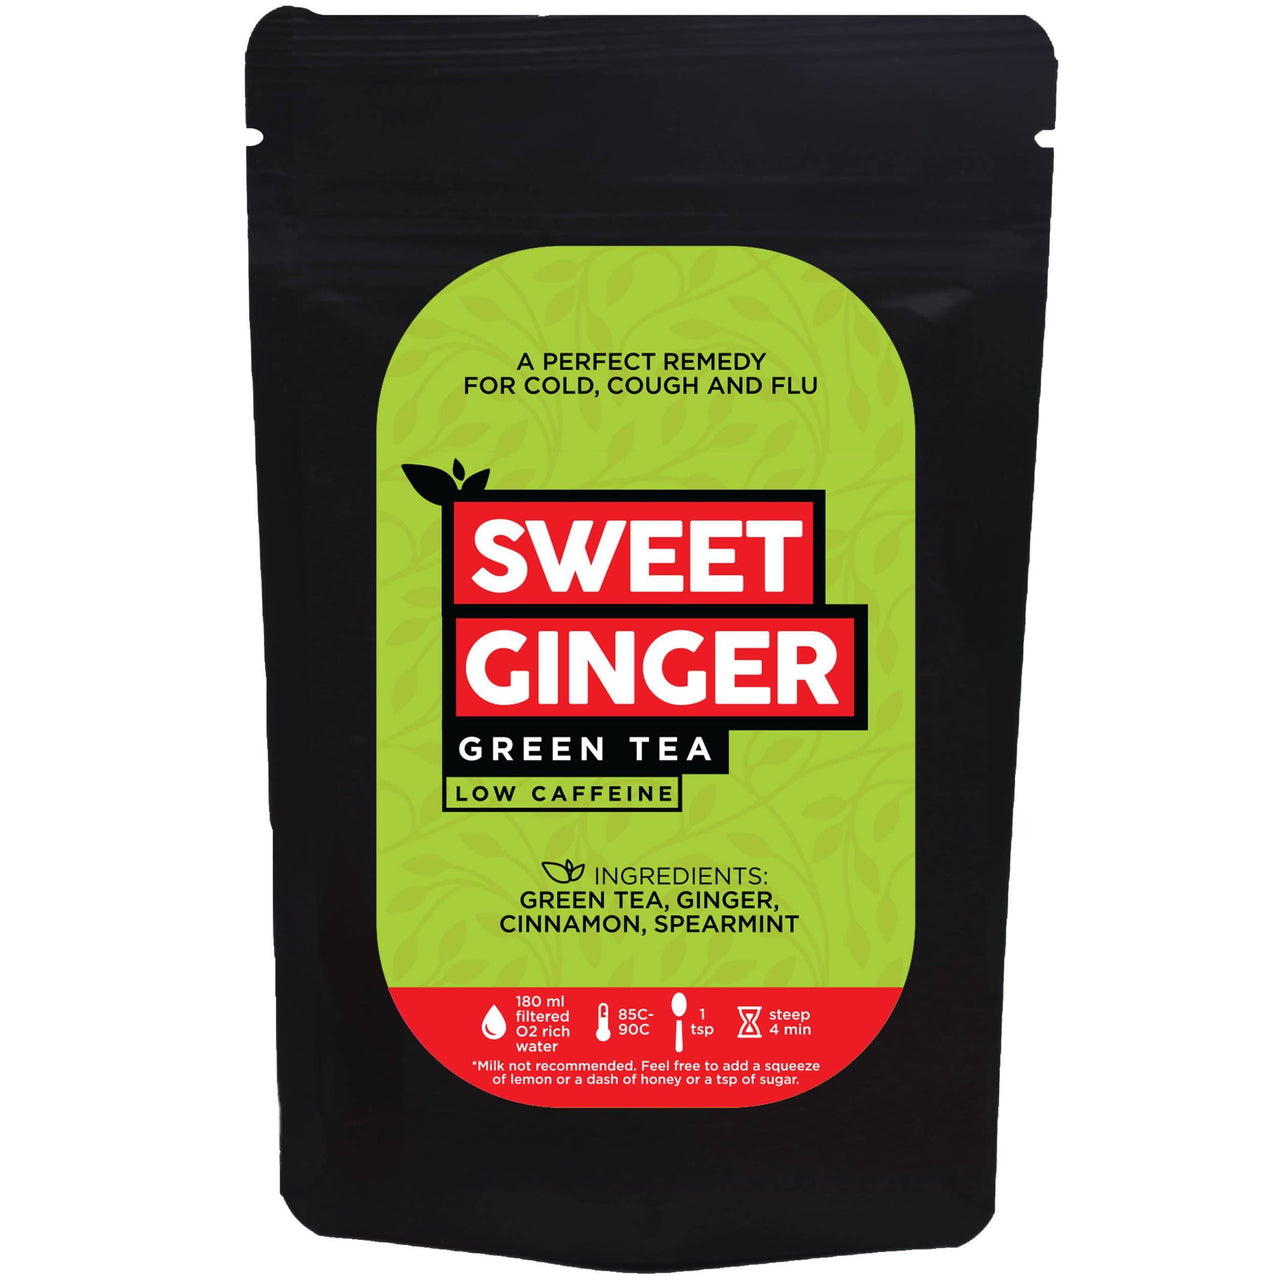 The Tea Trove - Sweet Ginger Green Tea